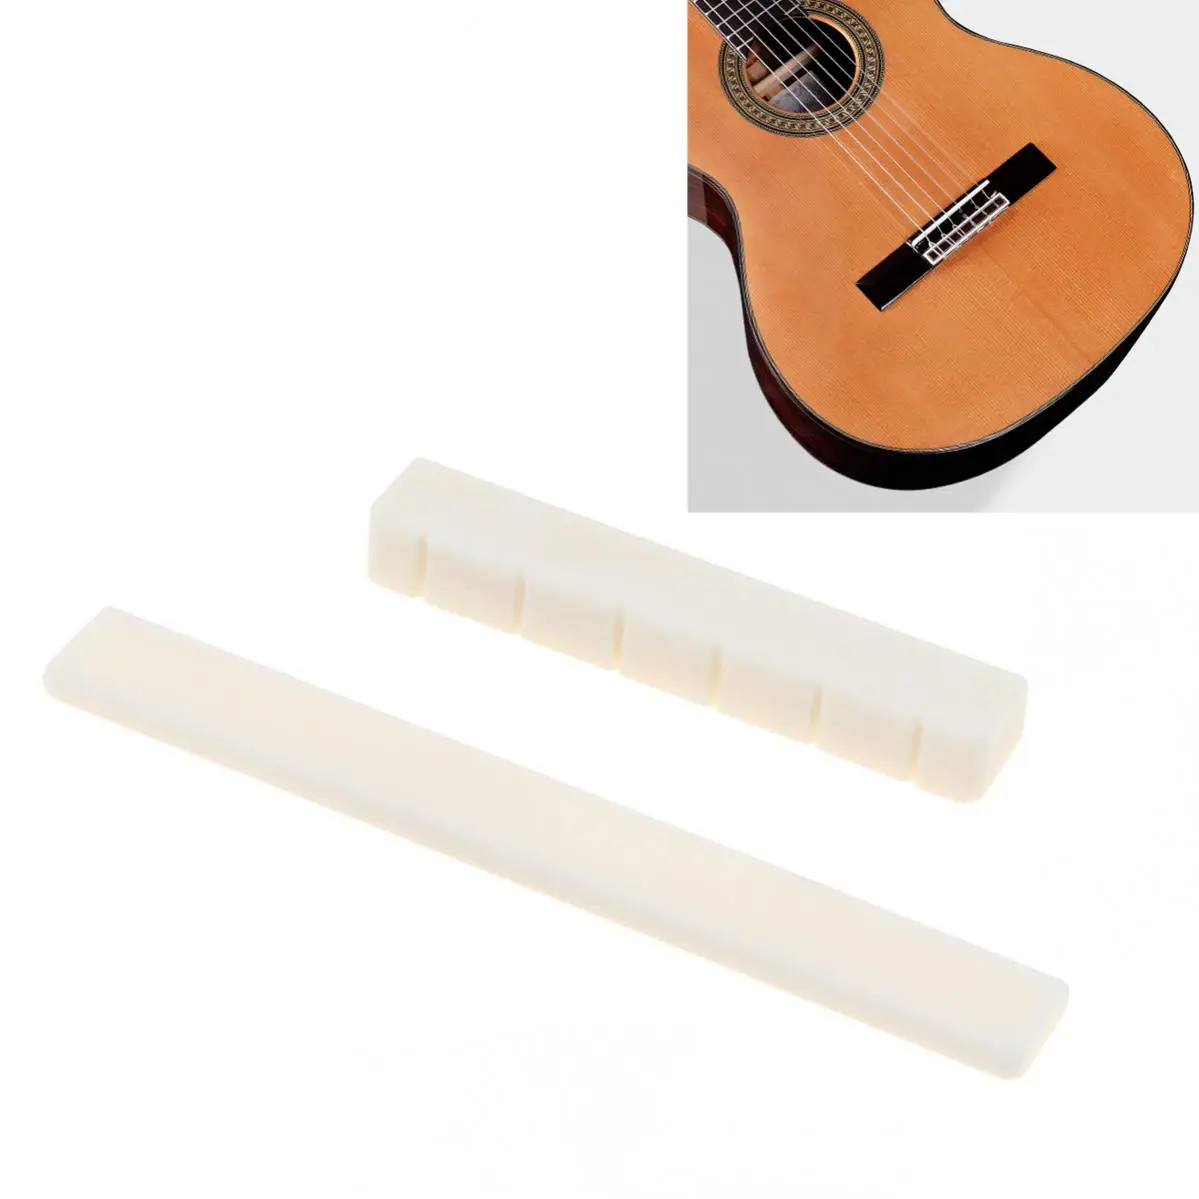 2 Pieces Portable Bone Guitar Bridge Nut Saddle for 6 String Classical Guitar